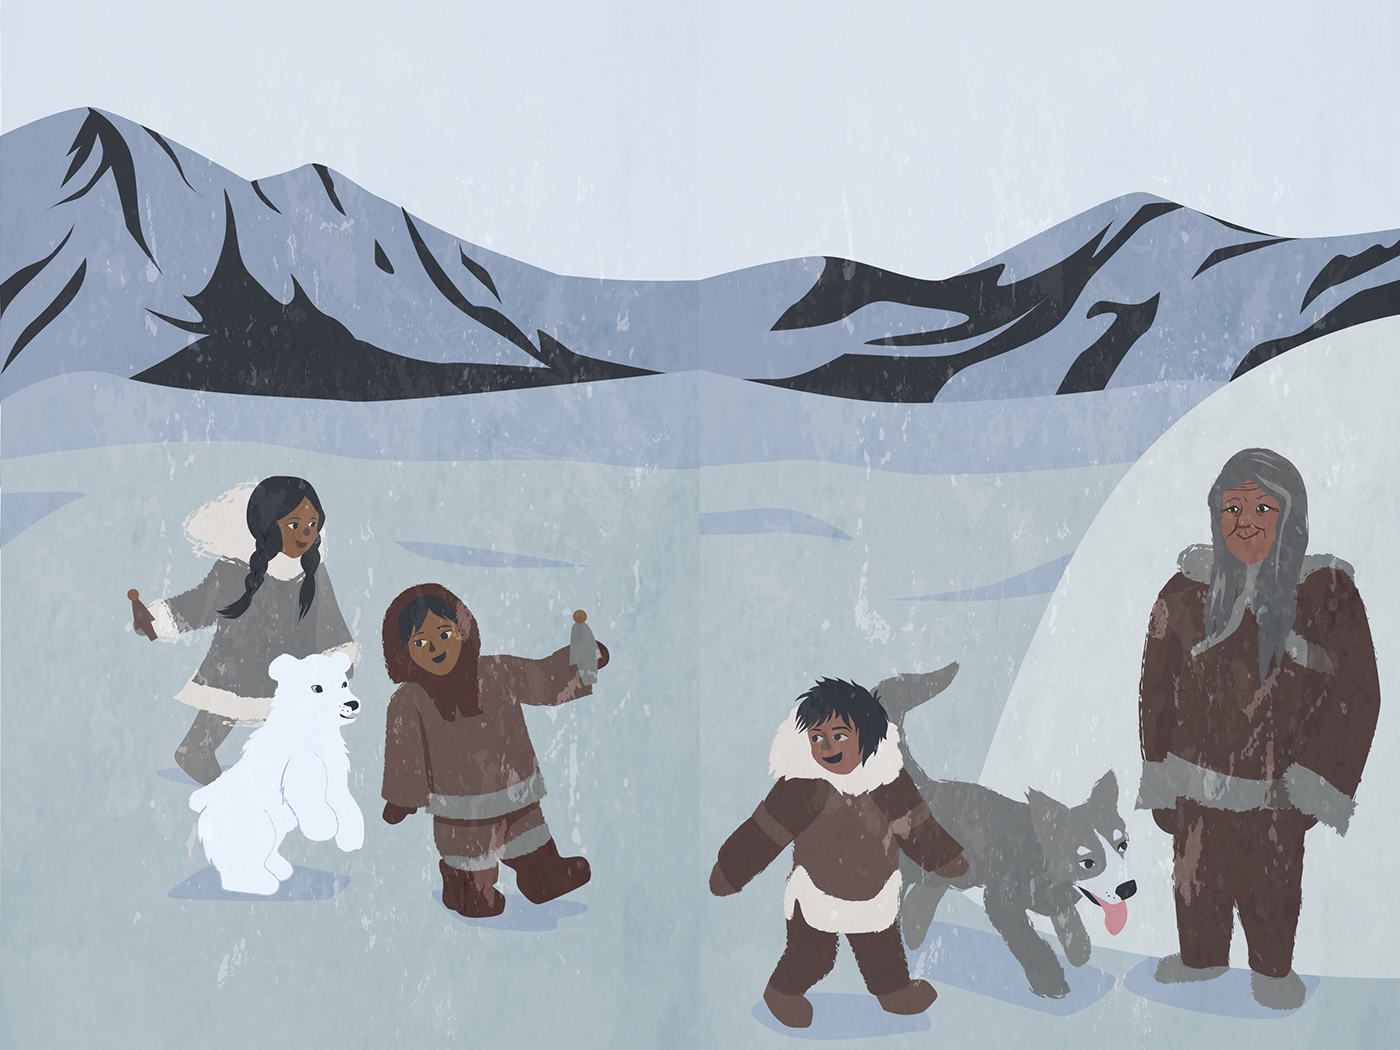 ILLUSTRATION  art direction  editorial publication Character design  Arctic Inuit legend Polar Bear mythology